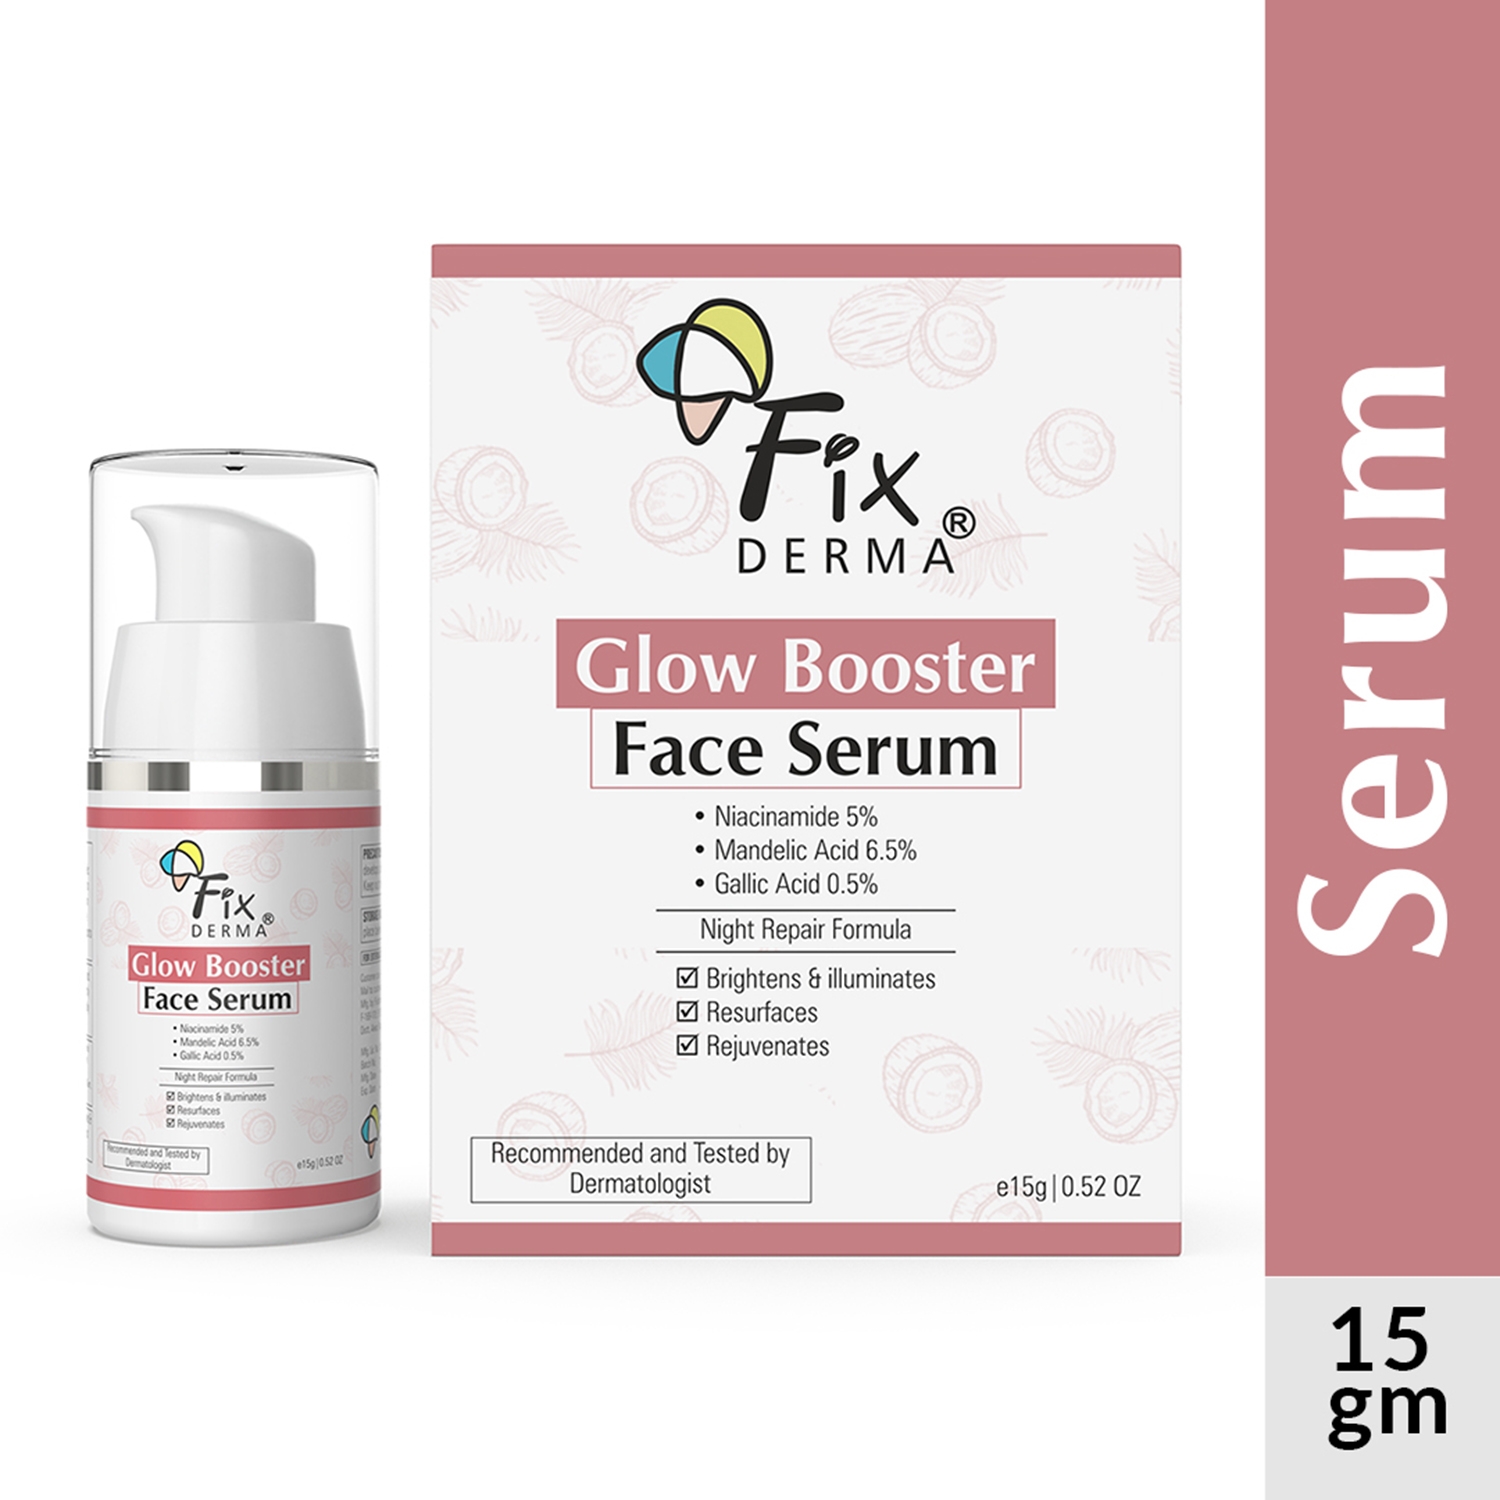 Fixderma | Fixderma 5% Niacinamide with 6.5% Mandelic Acid & 0.5% Gallic Acid Skin Brightening Face Serum (15g)